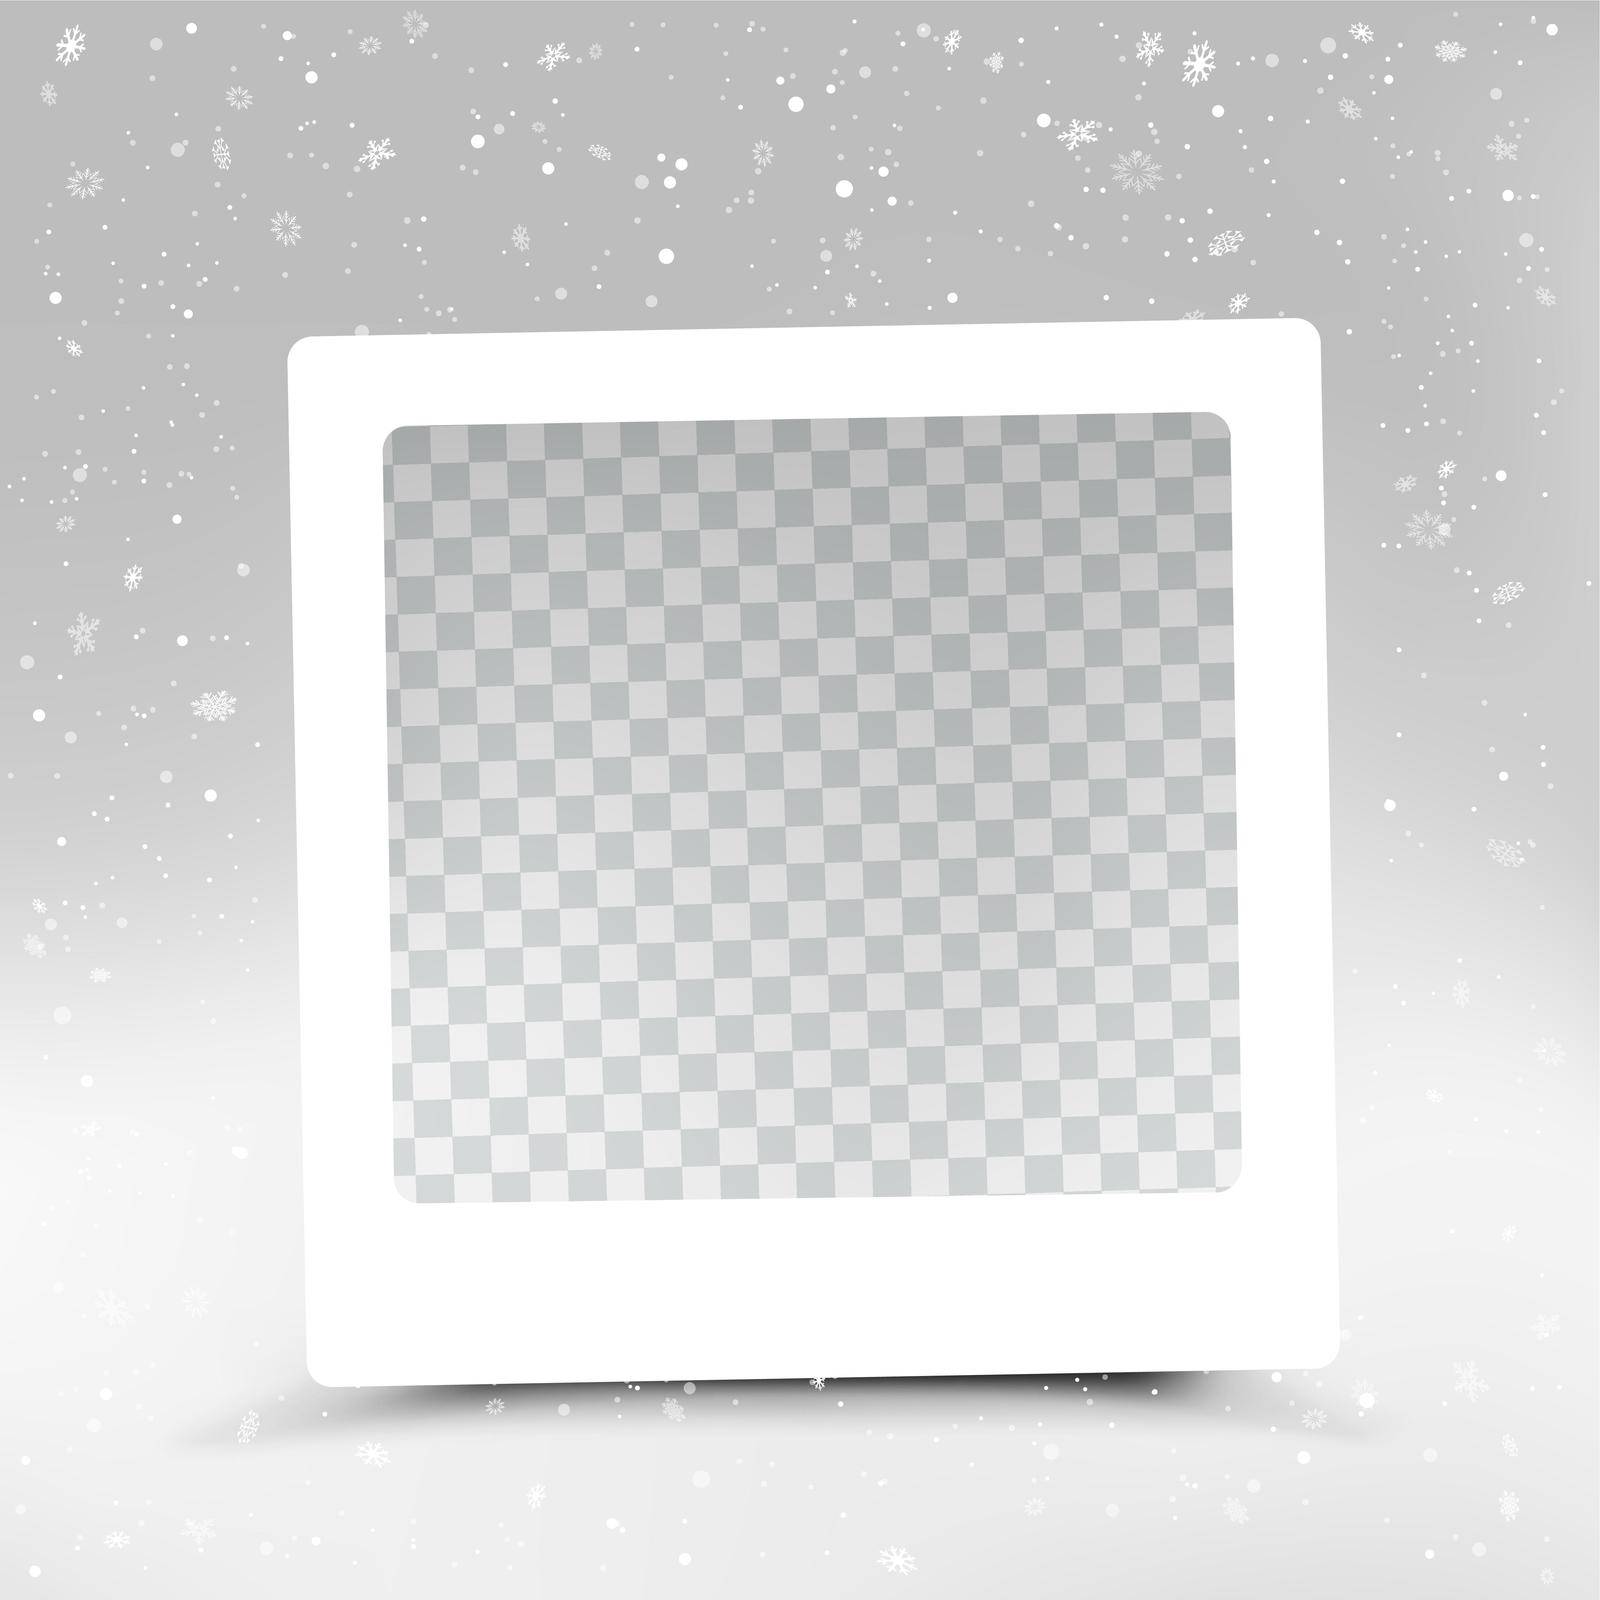 Christmas square photo frame template mockup. Holiday image framework background with snowfall. Seasonal picture border decoration backdrop